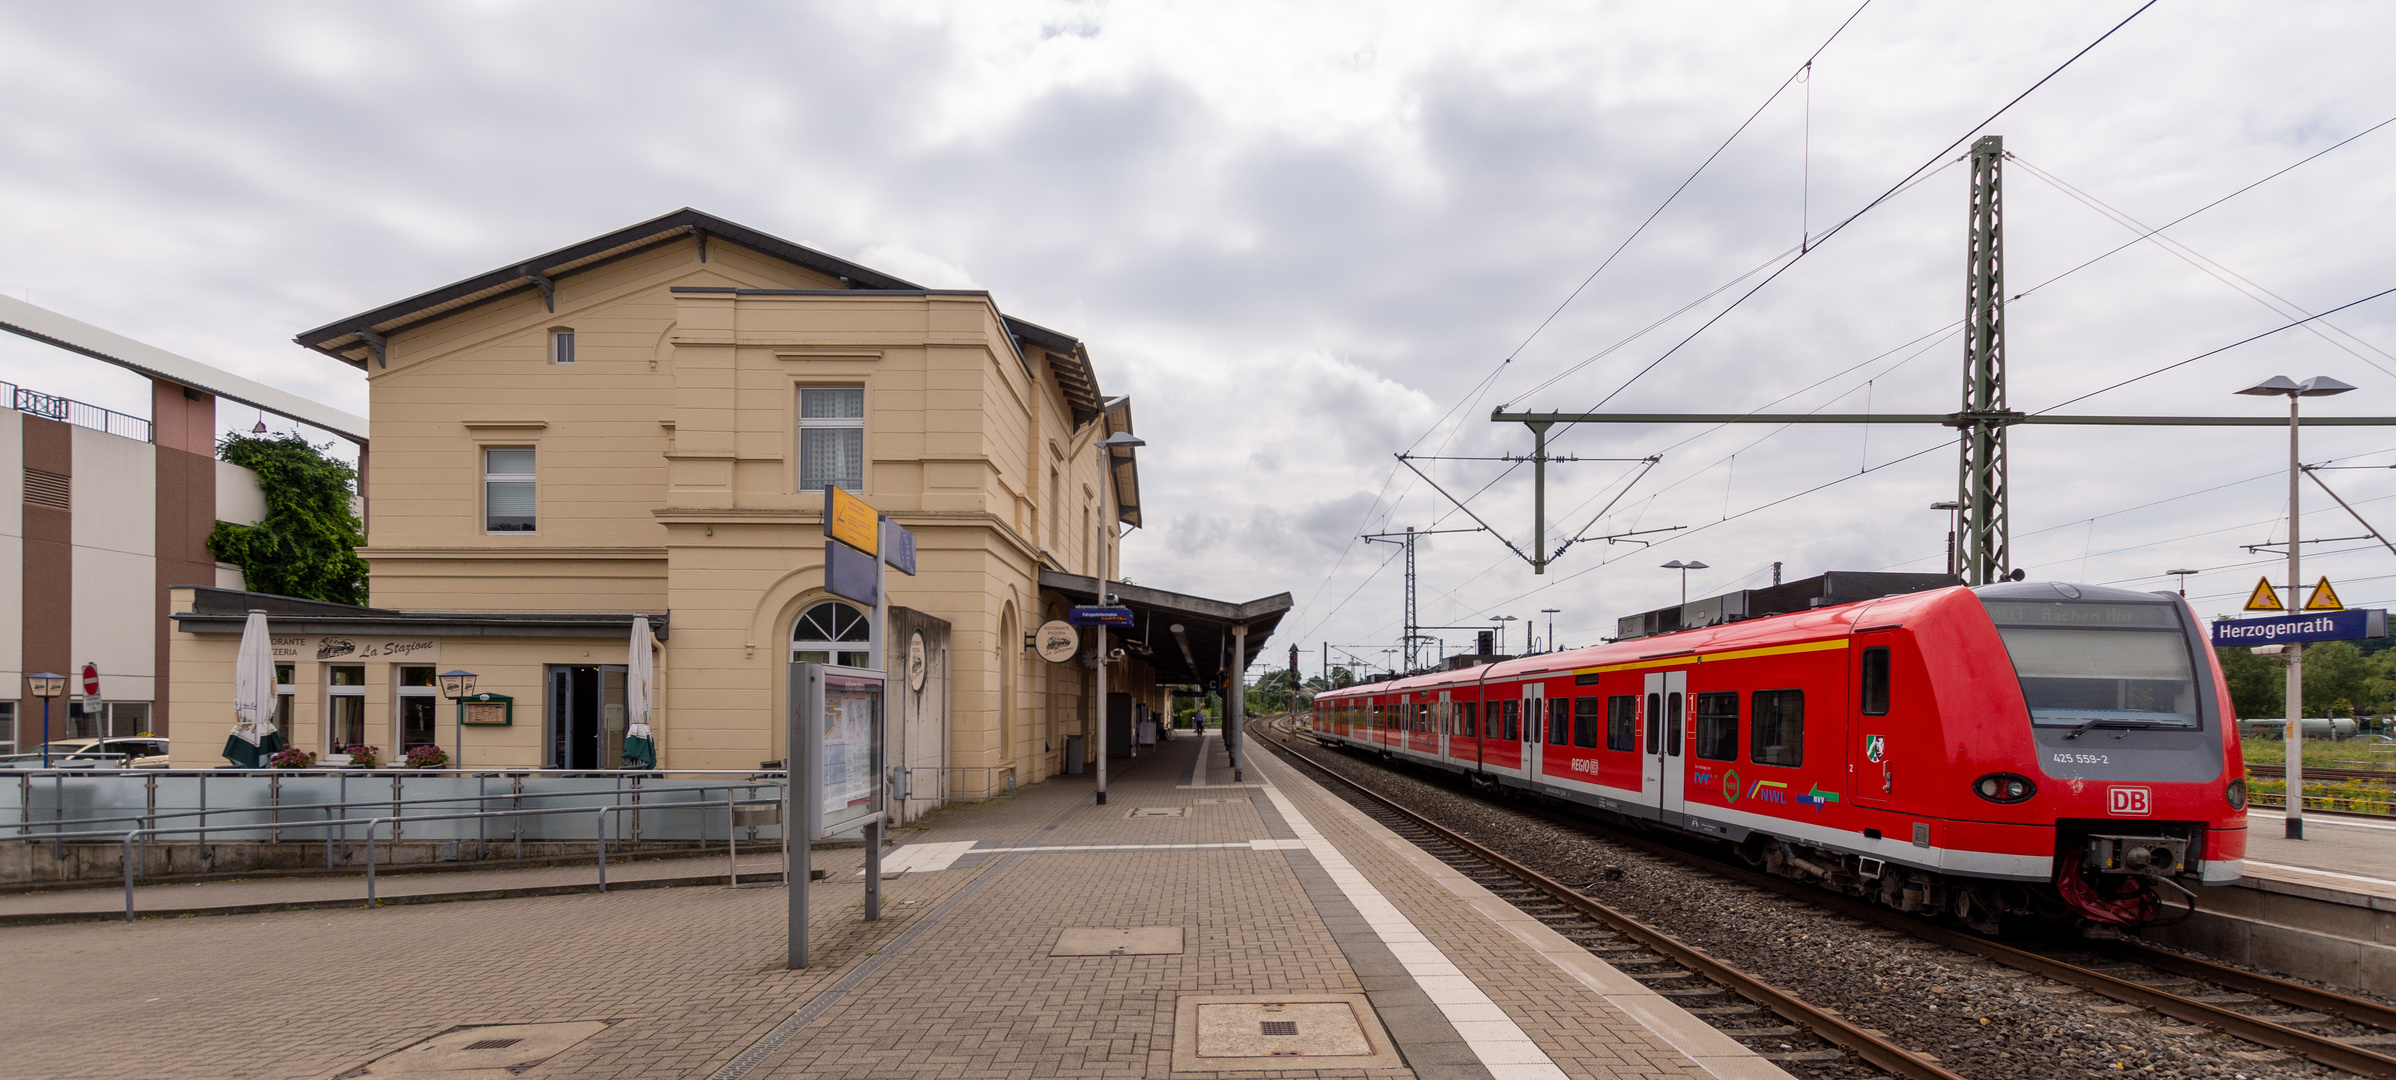 Herzogenrath - Railway Station - 04